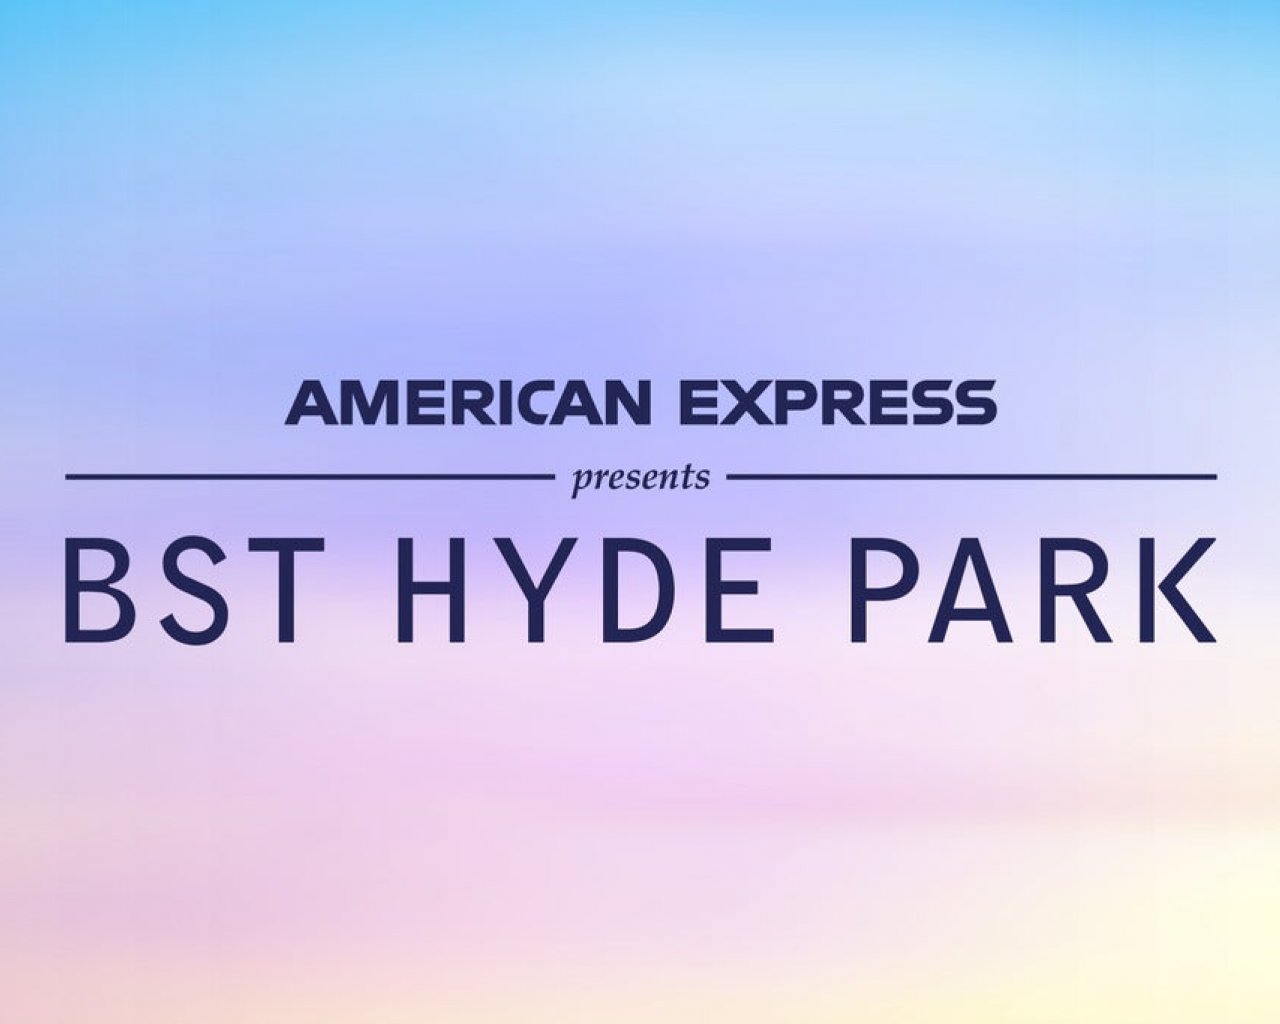 American Express Presents BST Hyde Park